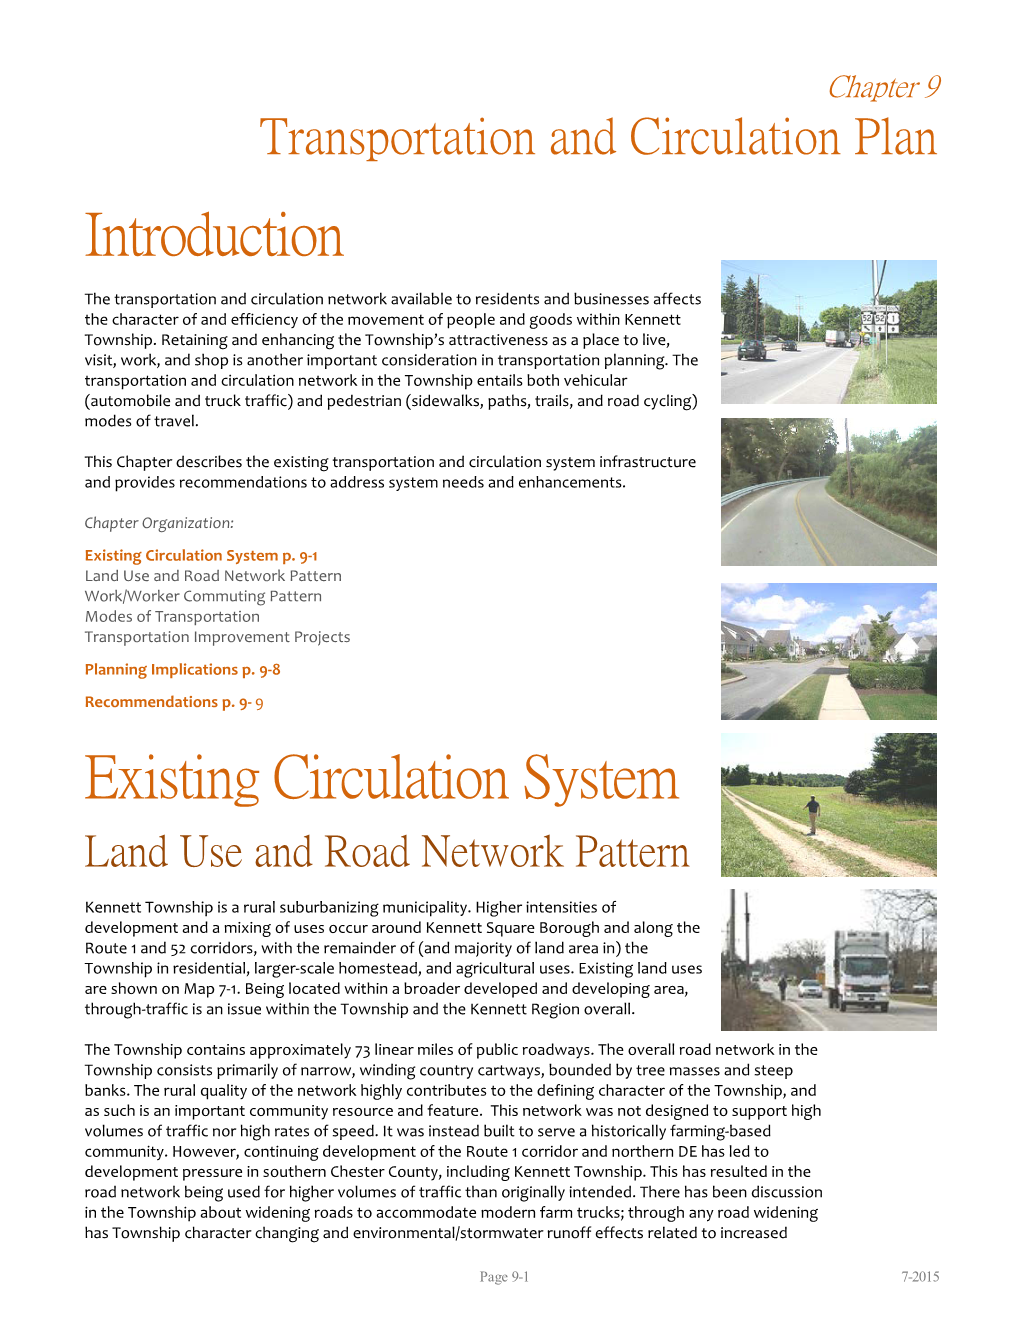 Chapter 9 Transportation and Circulation Plan (PDF)